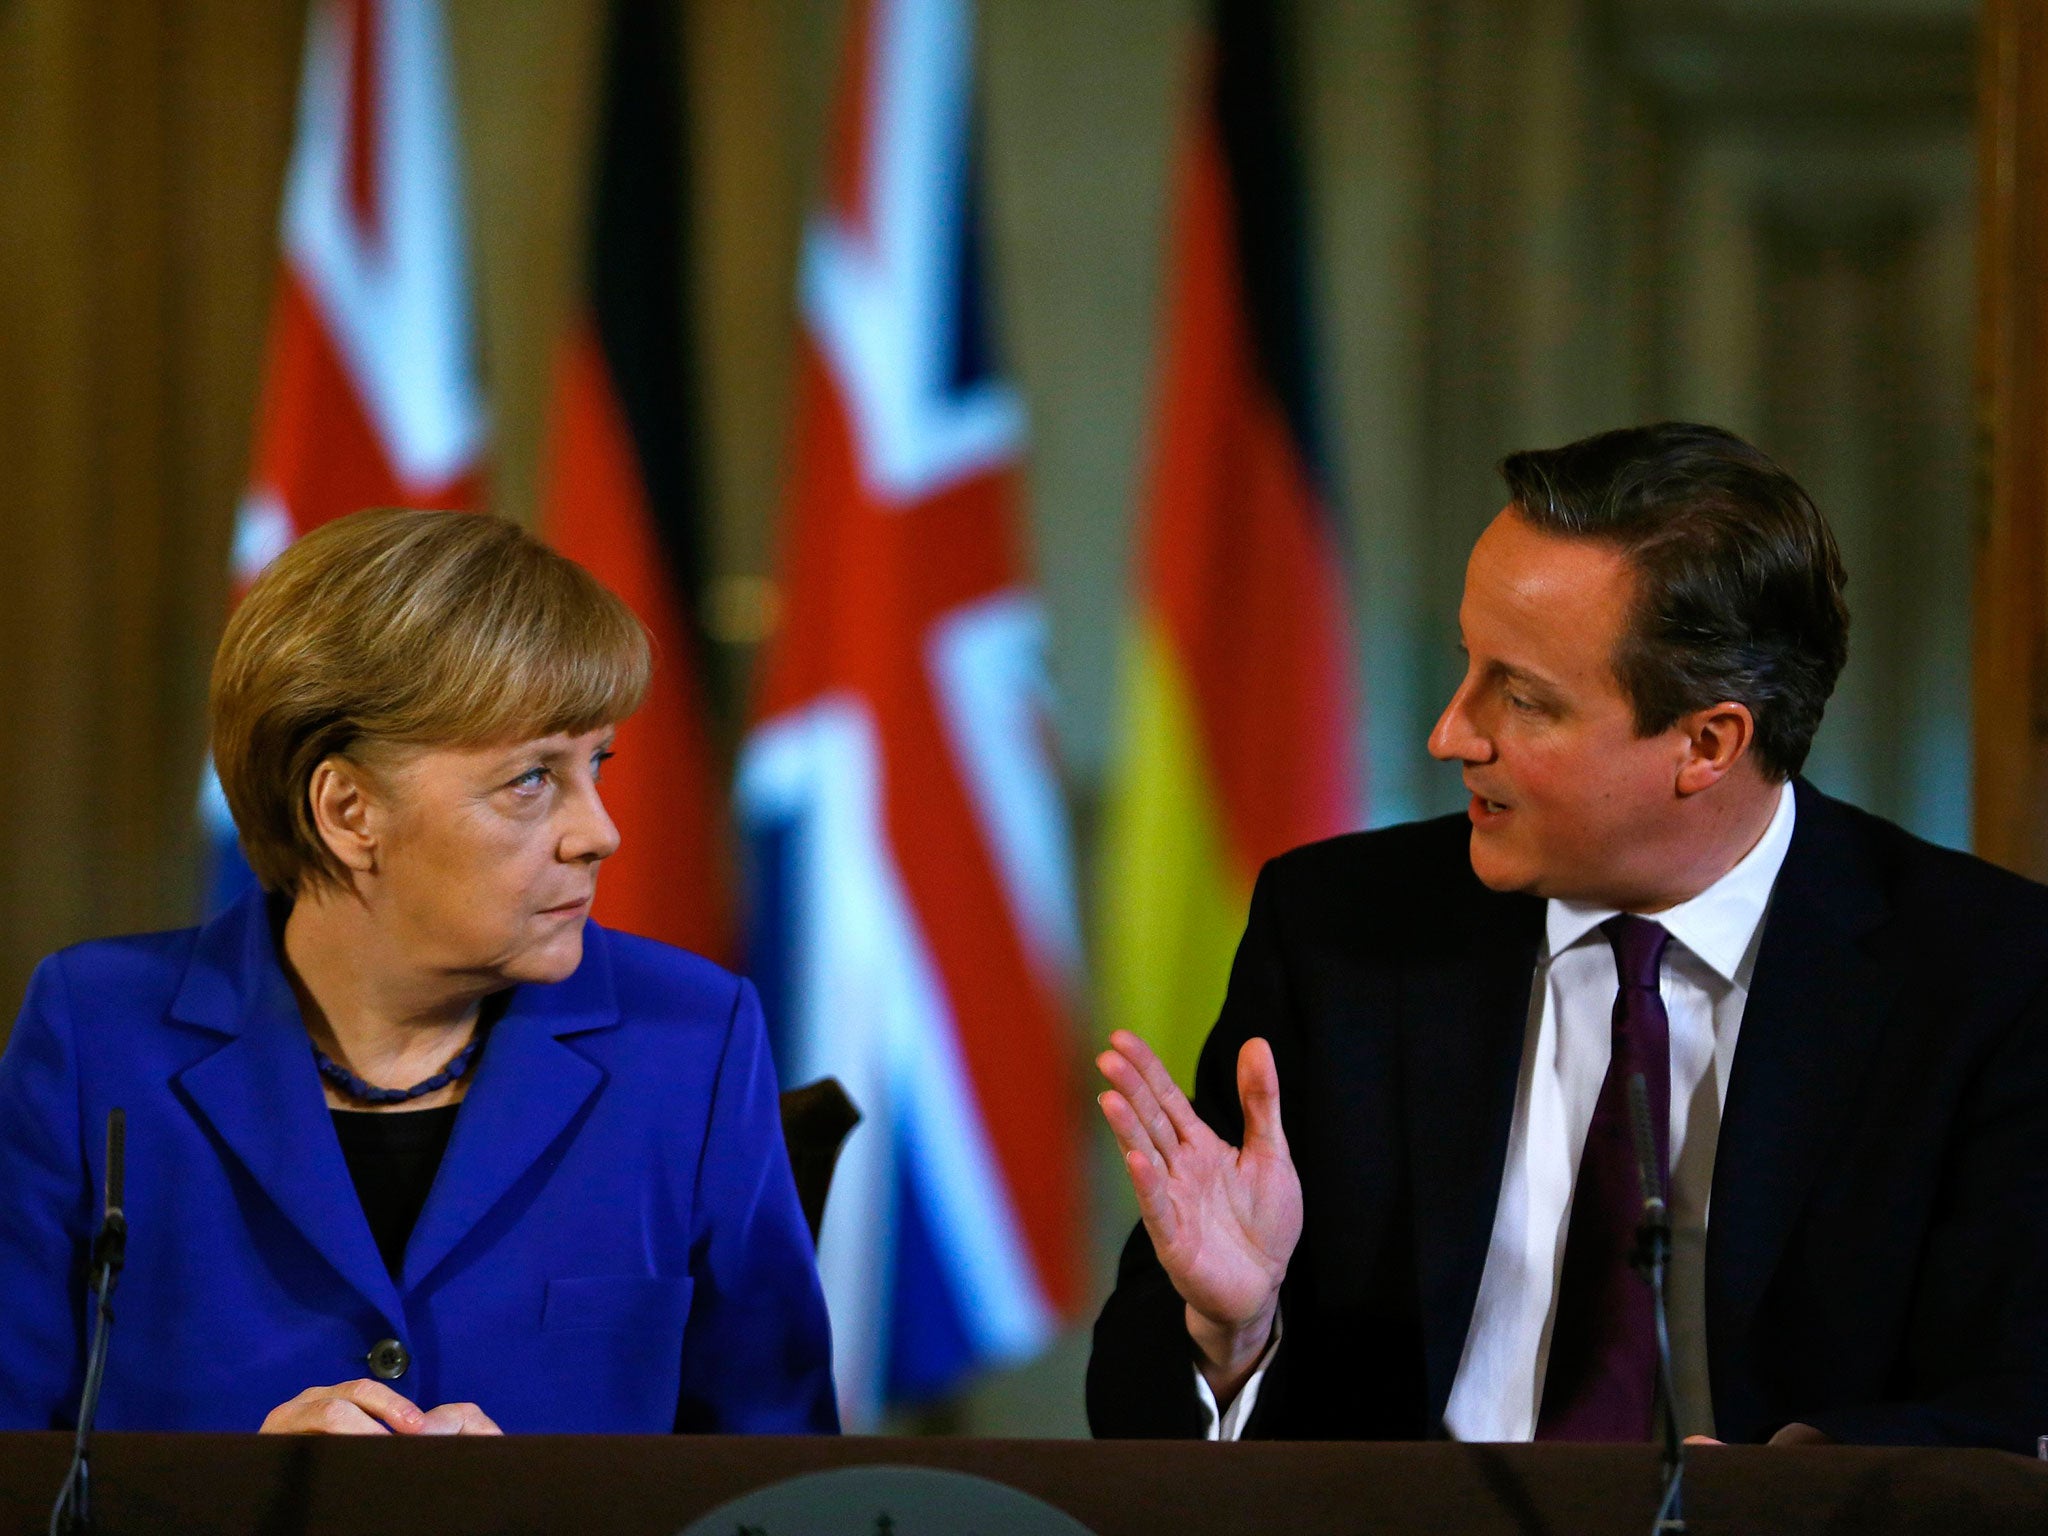 Angela Merkel had already warned David Cameron that the rules are non-negotiable